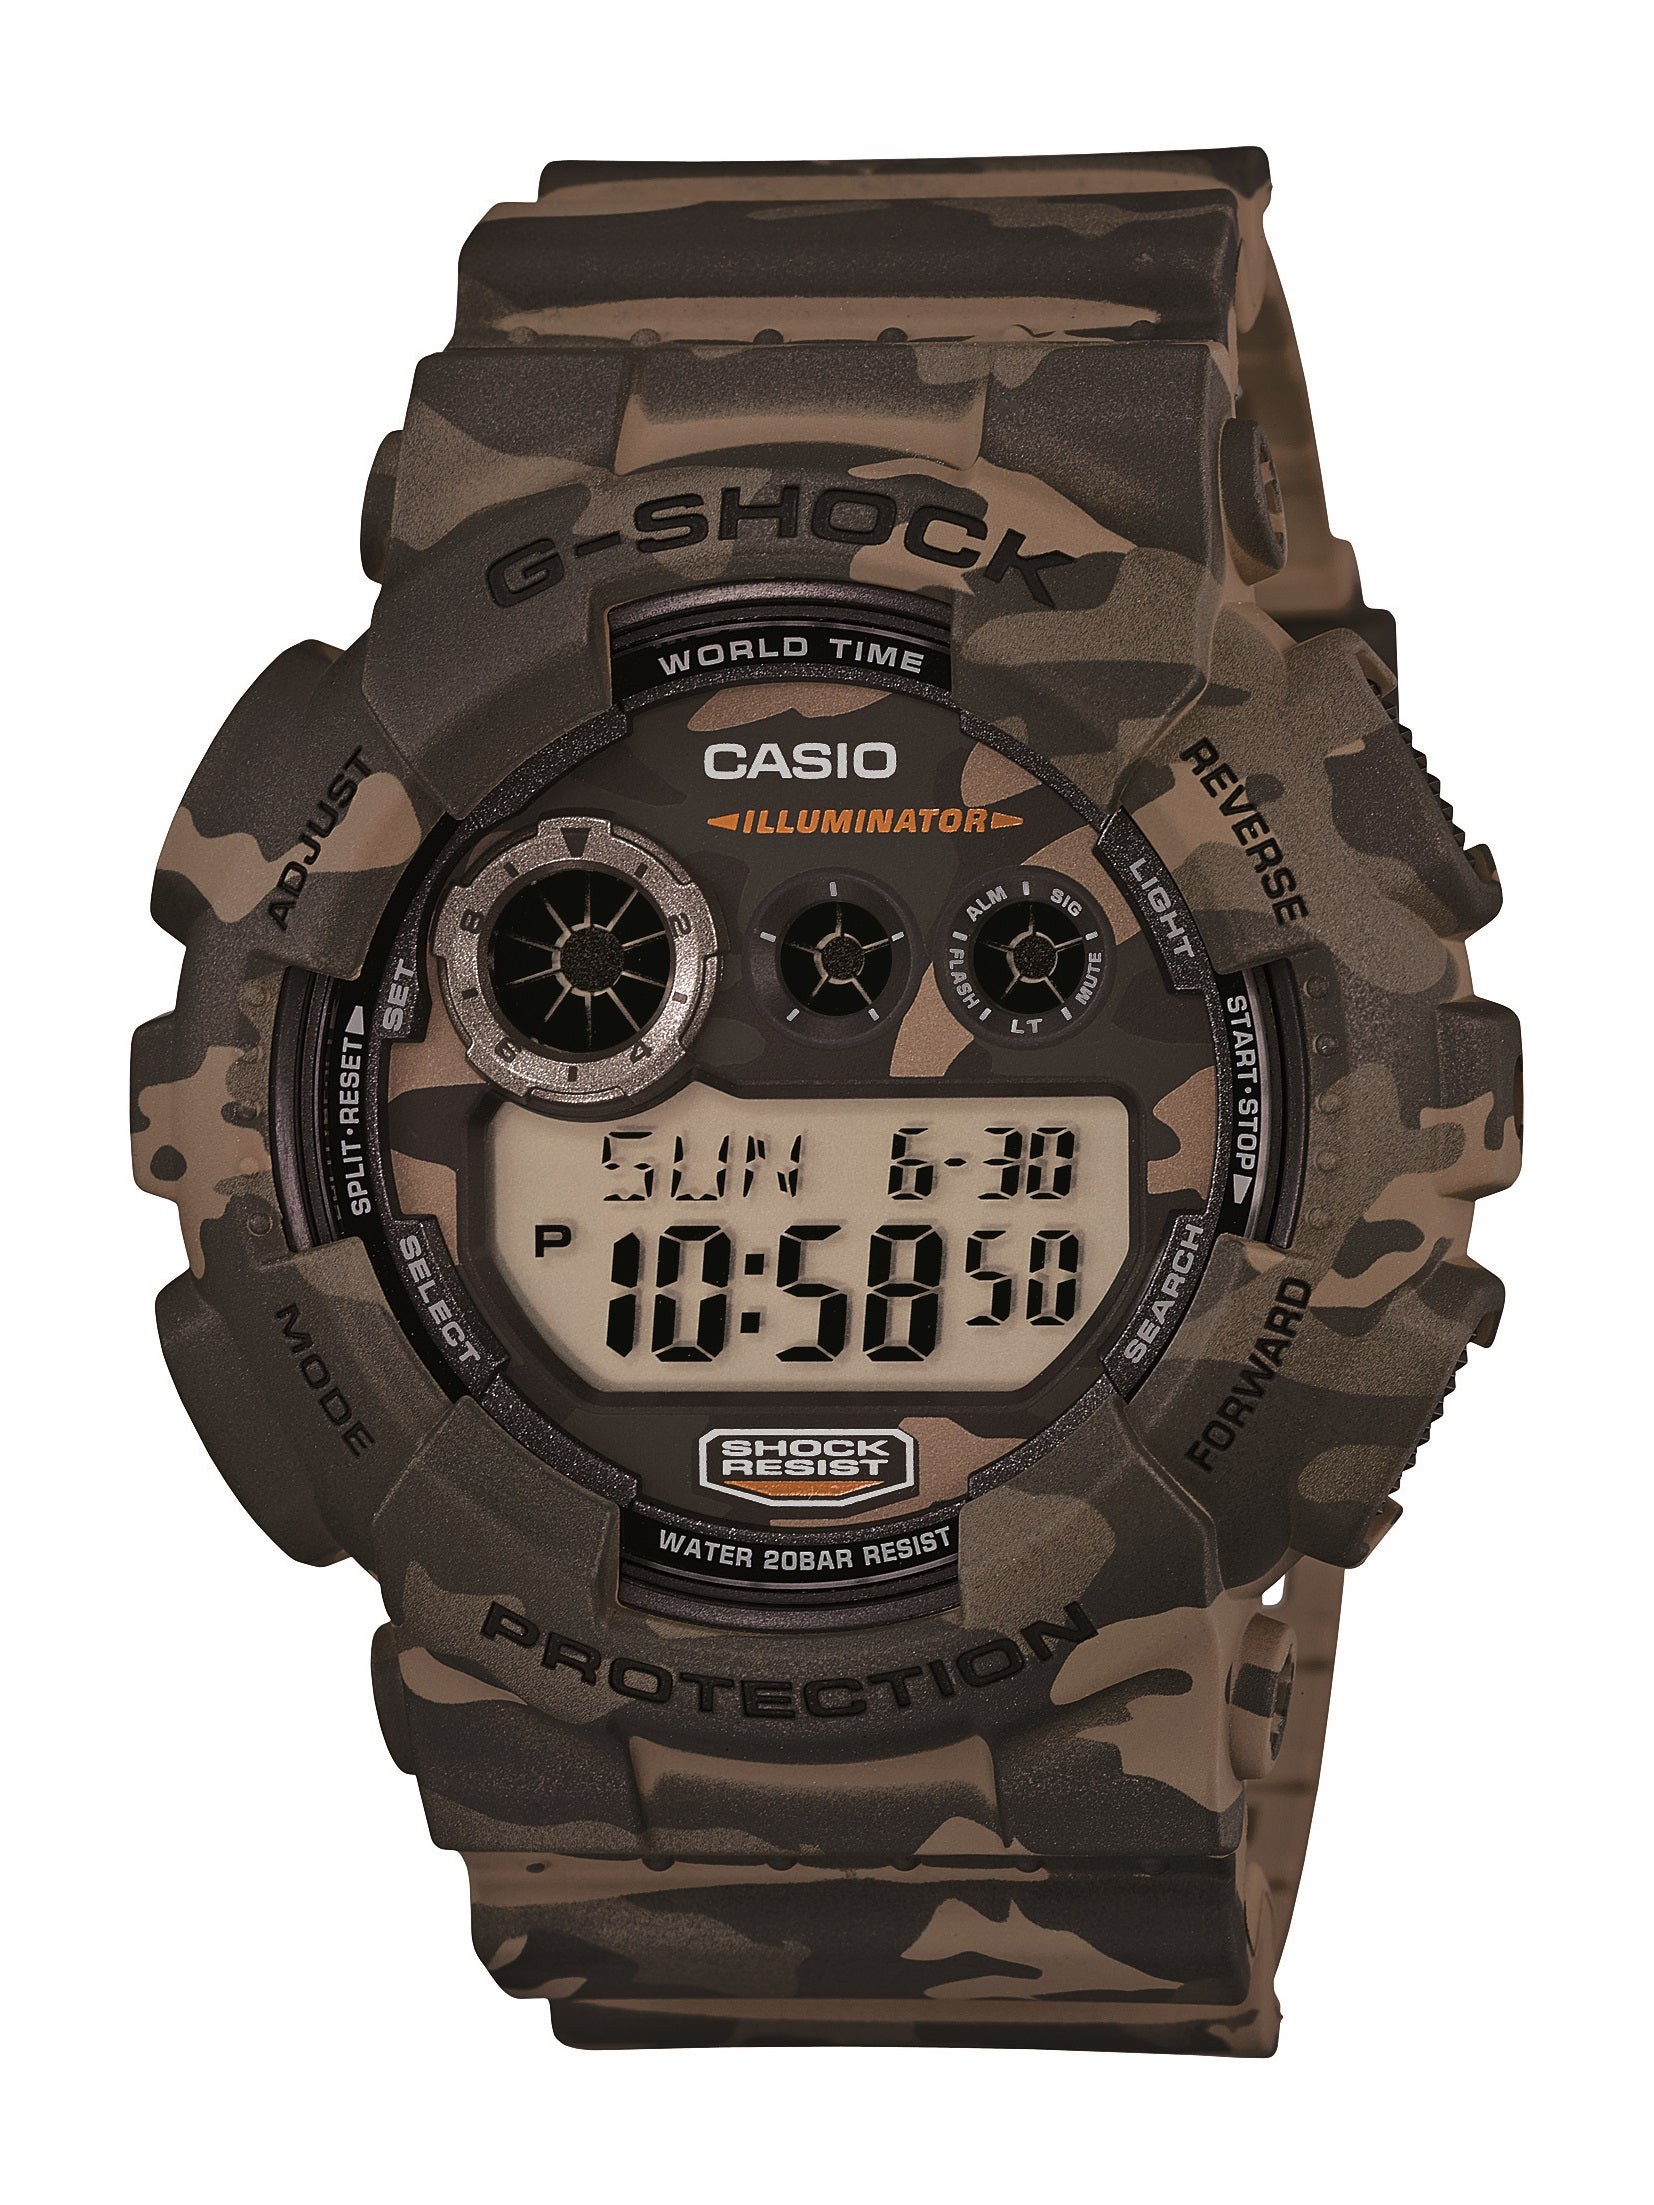 Mens G-Shock Digital Watch Camouflage